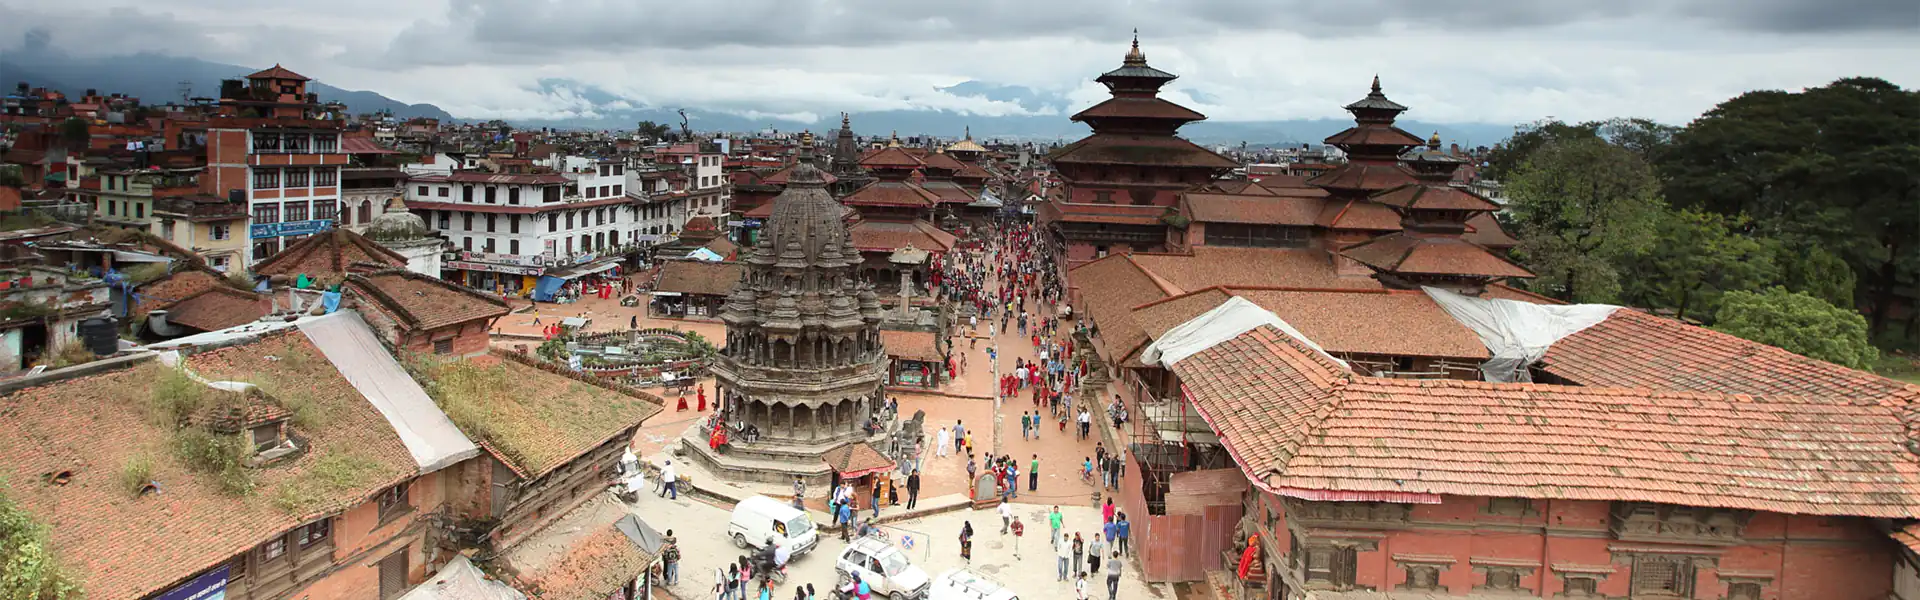 Kathmandu Durbar Square area